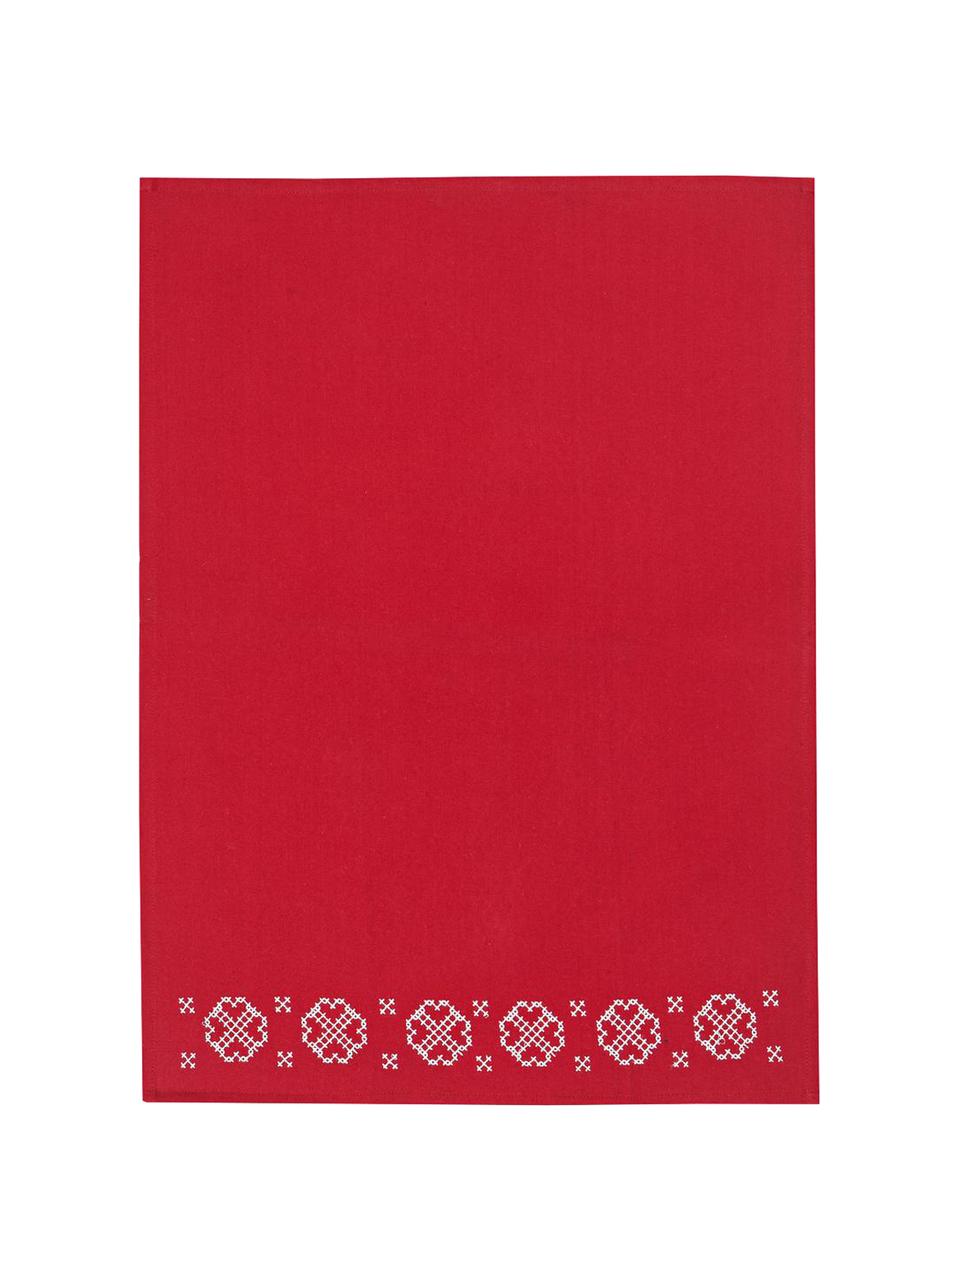 Torchon rouge motif Noël Embroidery, Rouge, blanc